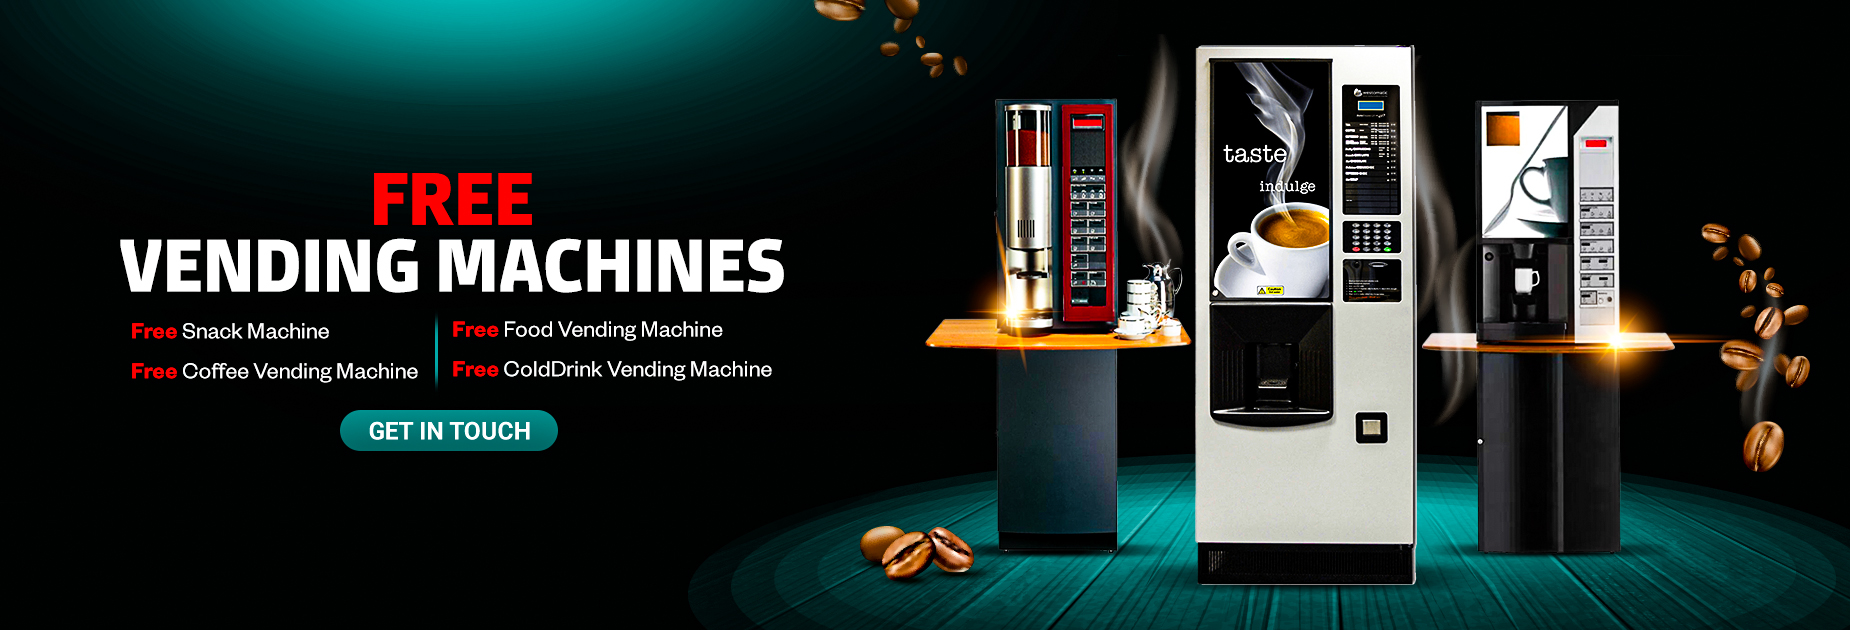 Free vendign machines